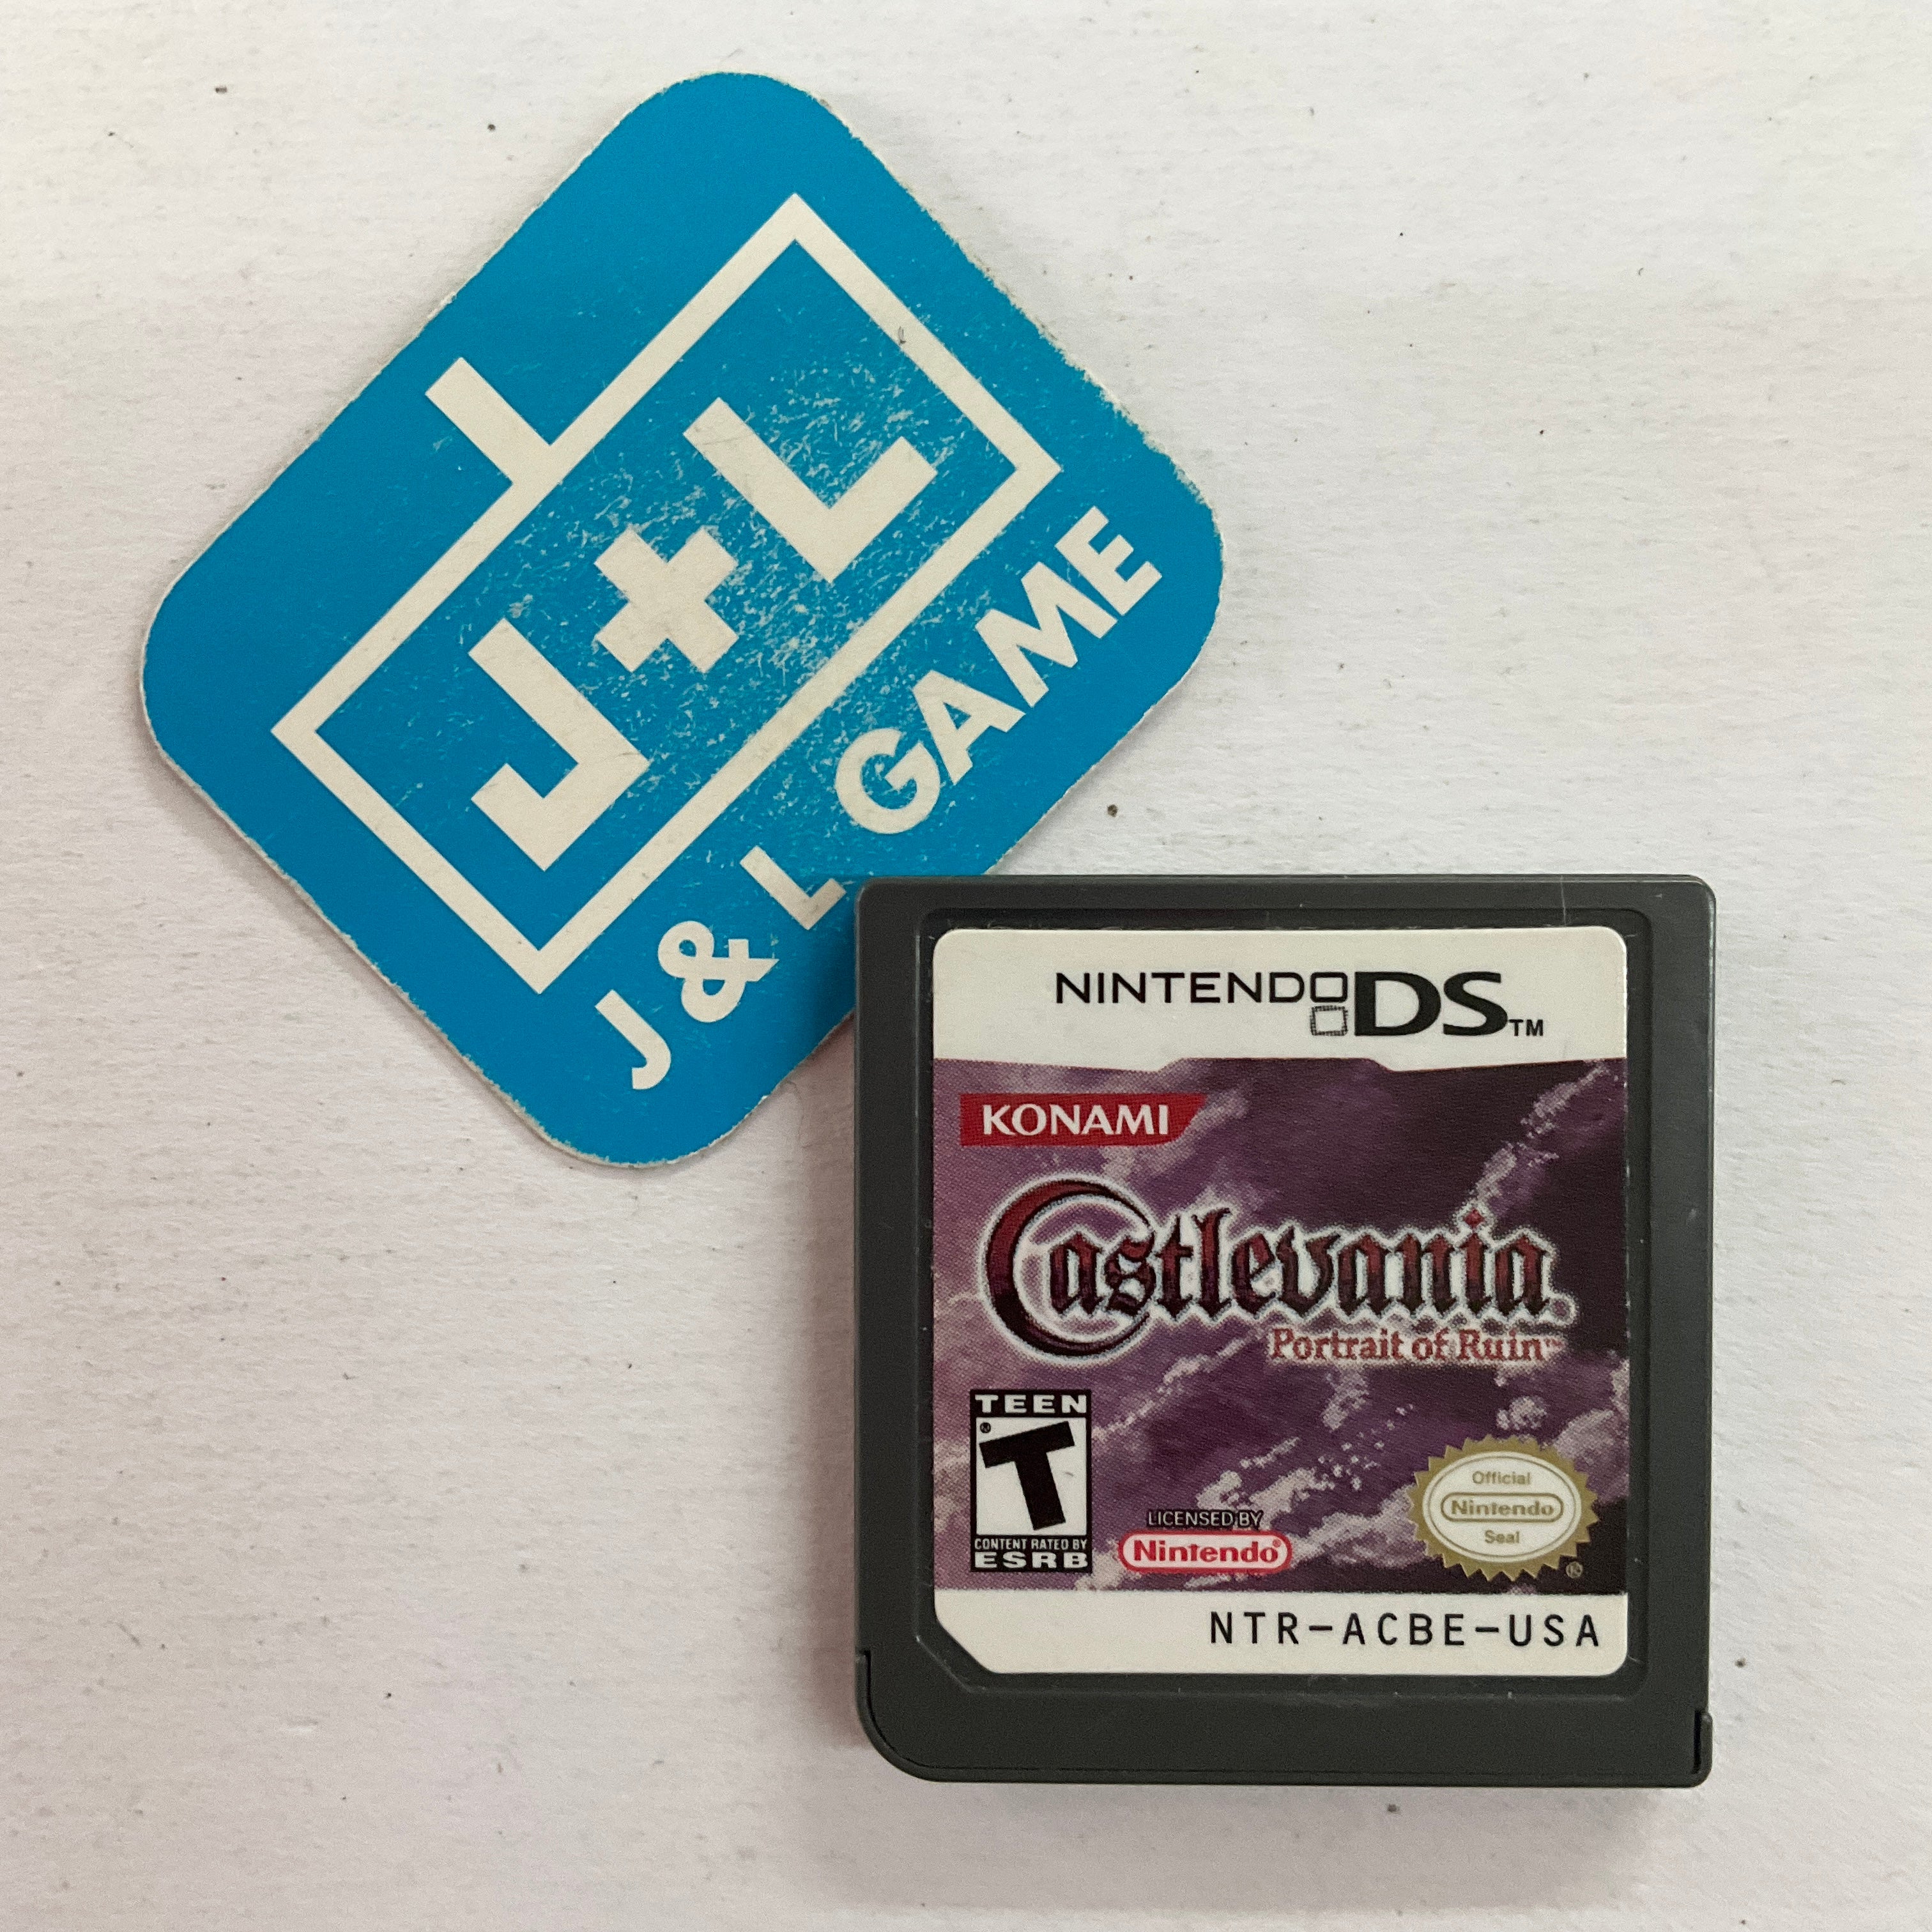 Castlevania: Portrait of Ruin - (NDS) Nintendo DS [Pre-Owned] Video Games Konami   